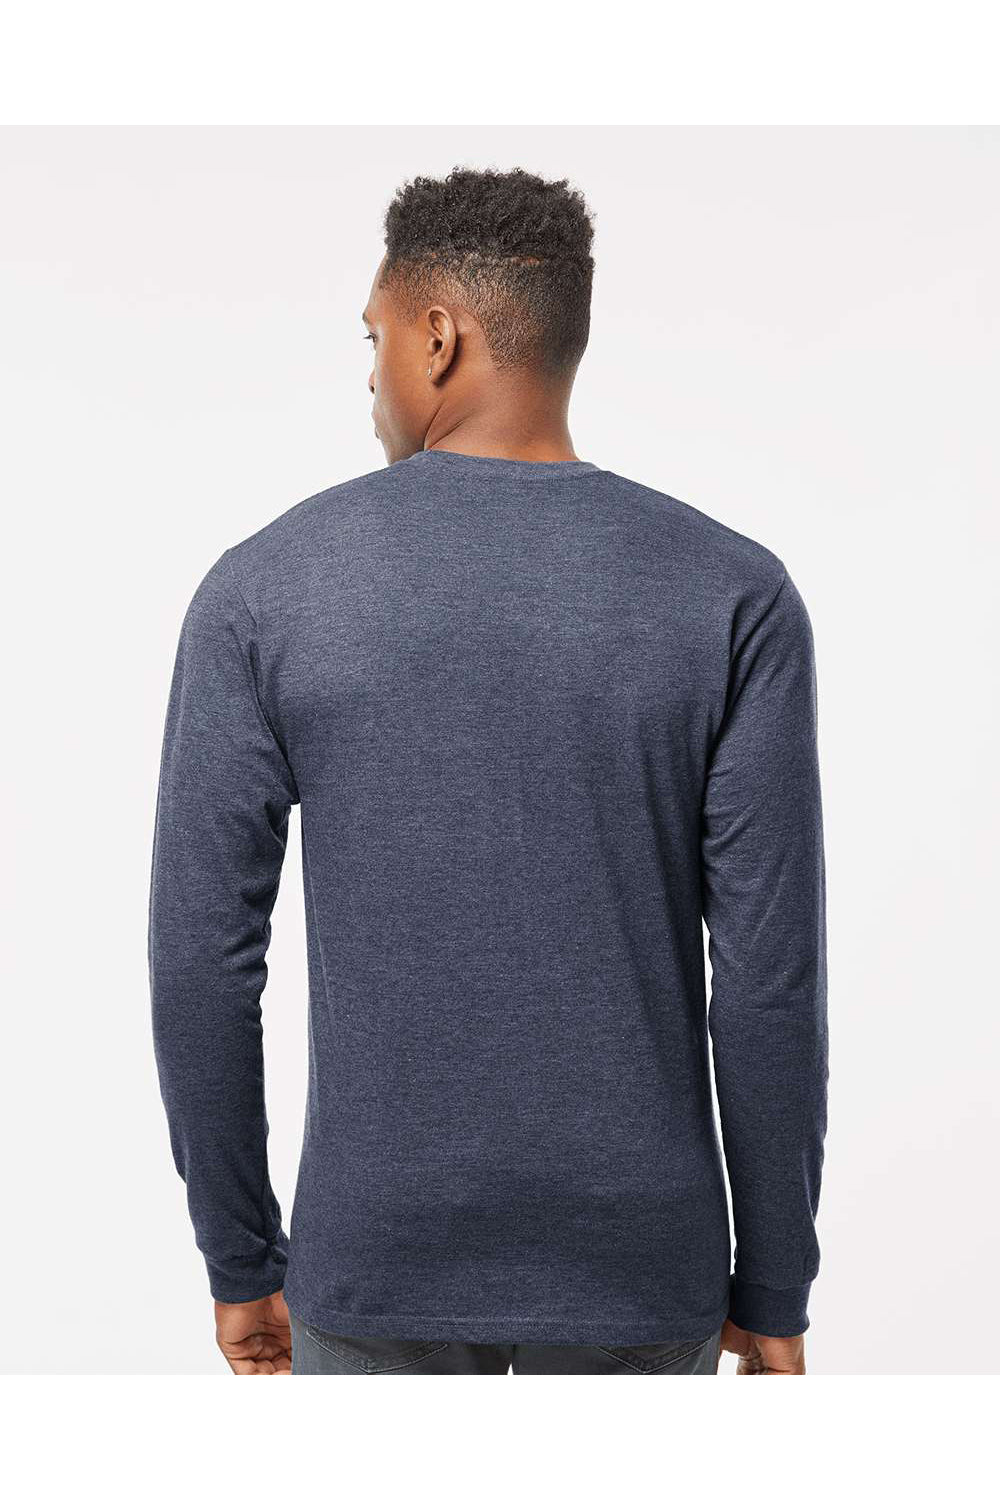 Tultex 291 Mens Jersey Long Sleeve Crewneck T-Shirt Heather Denim Blue Model Back